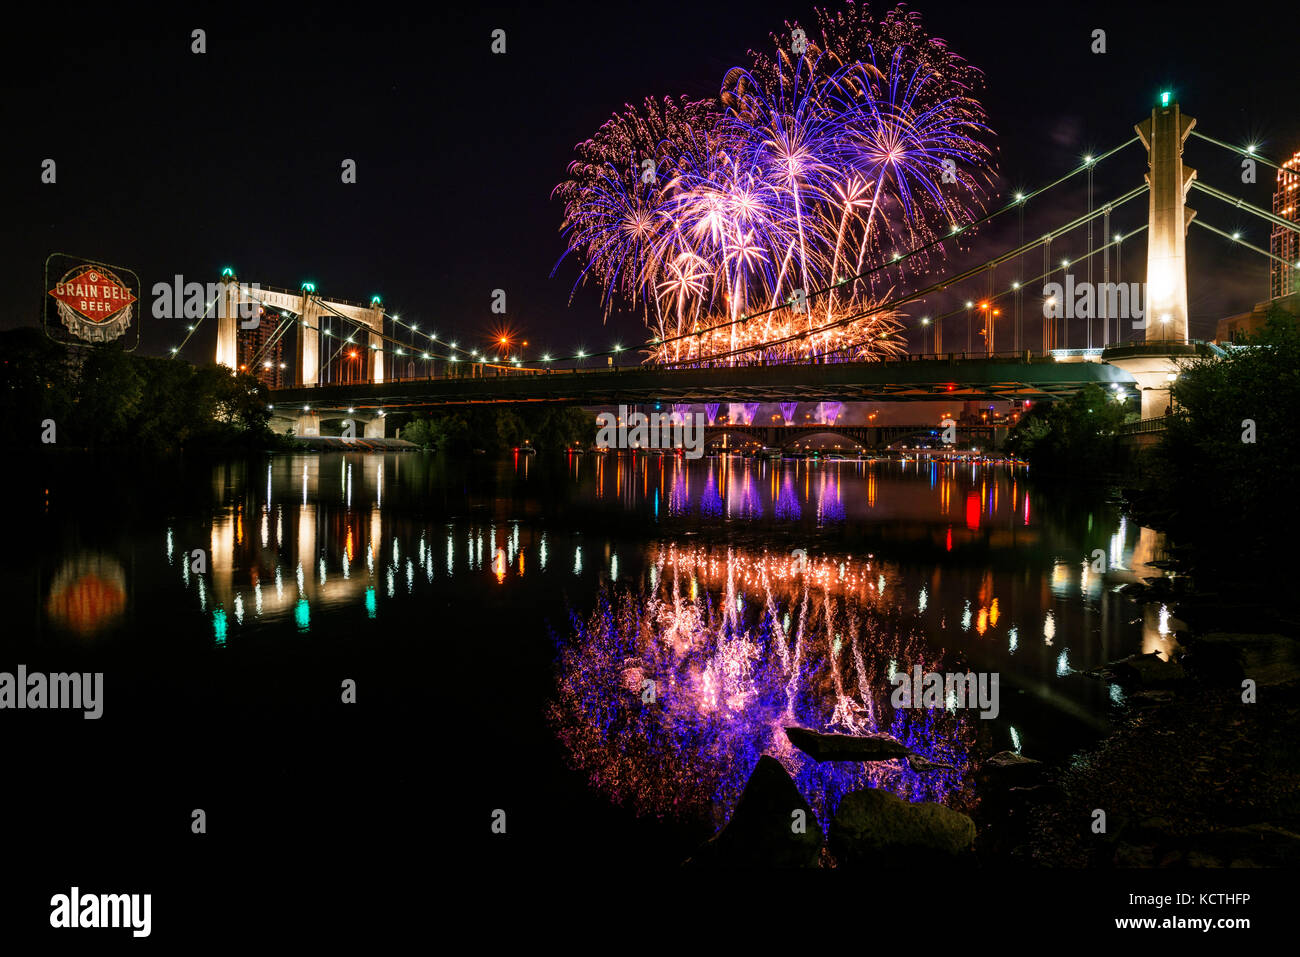 Minneapolis Aquatennial fireworks over the Fr. Hennepin Bridge and